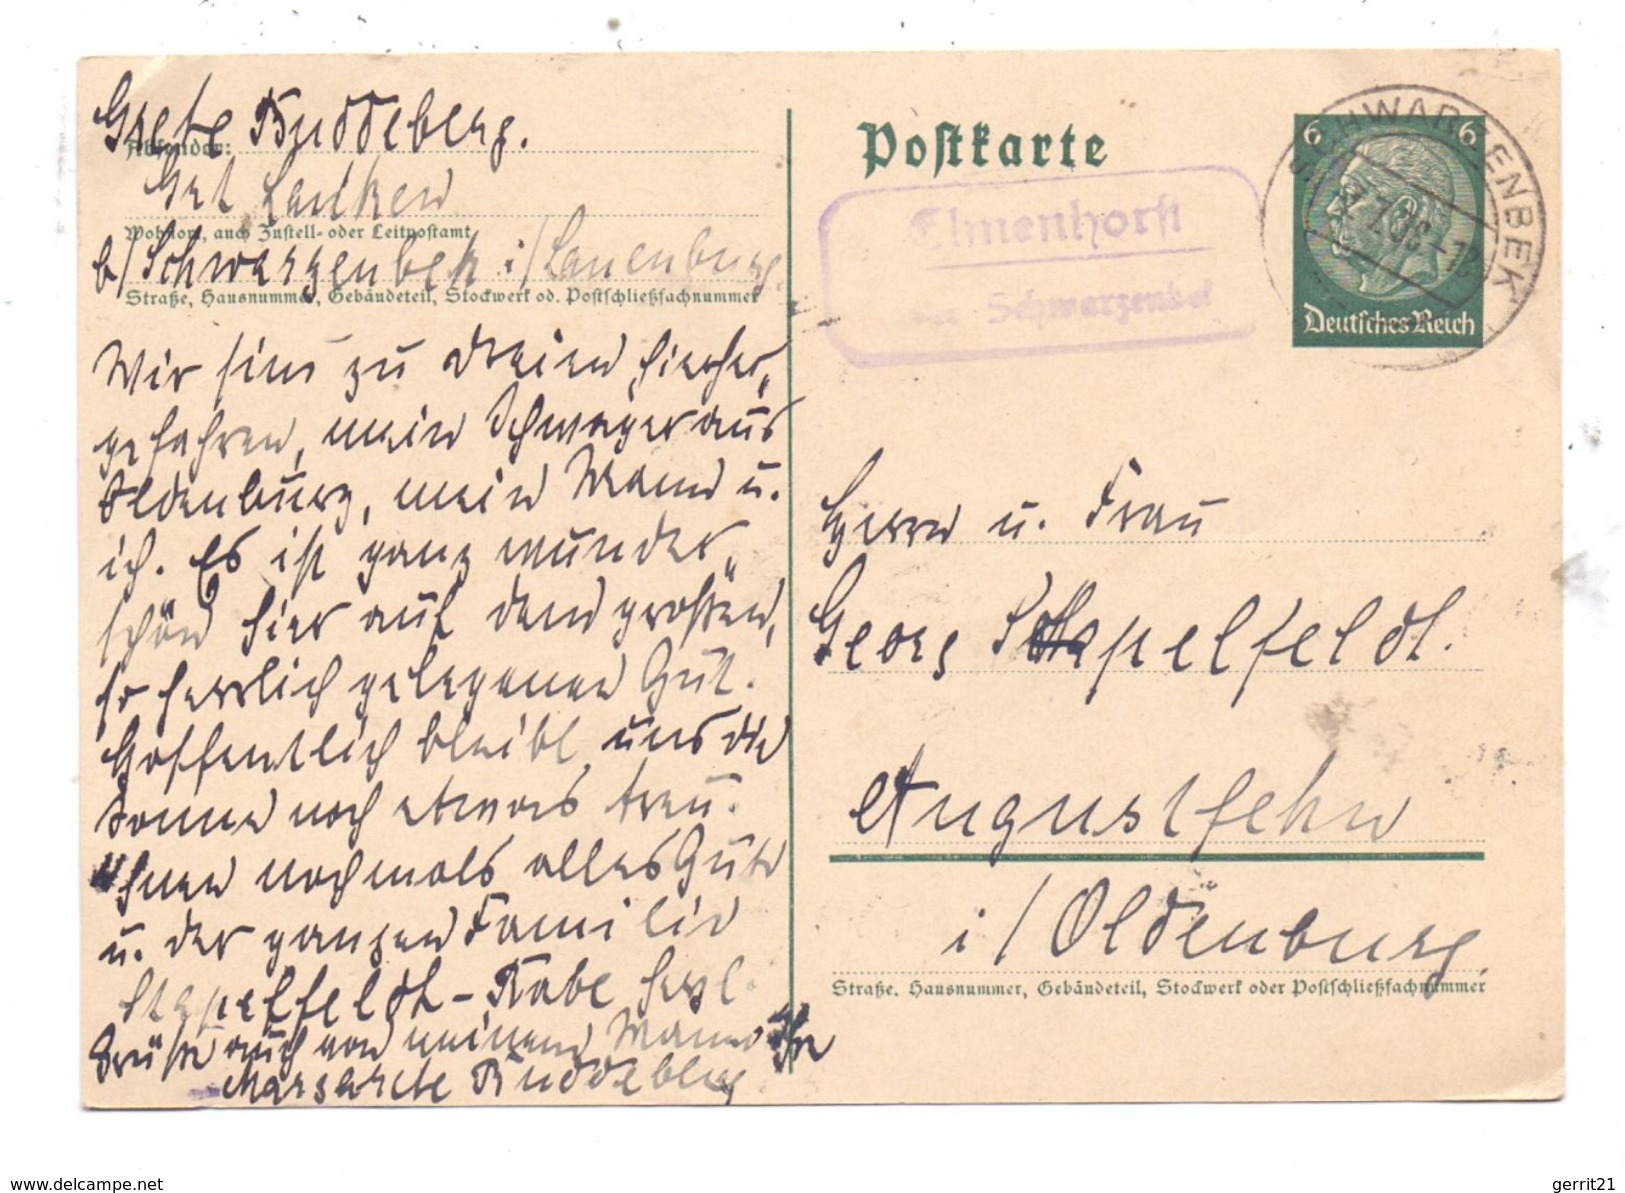 2053 ELMENHORST - Postgeschichte, Landpostsempel Elmenhorst über Schwarzenbek, 1938 - Schwarzenbeck